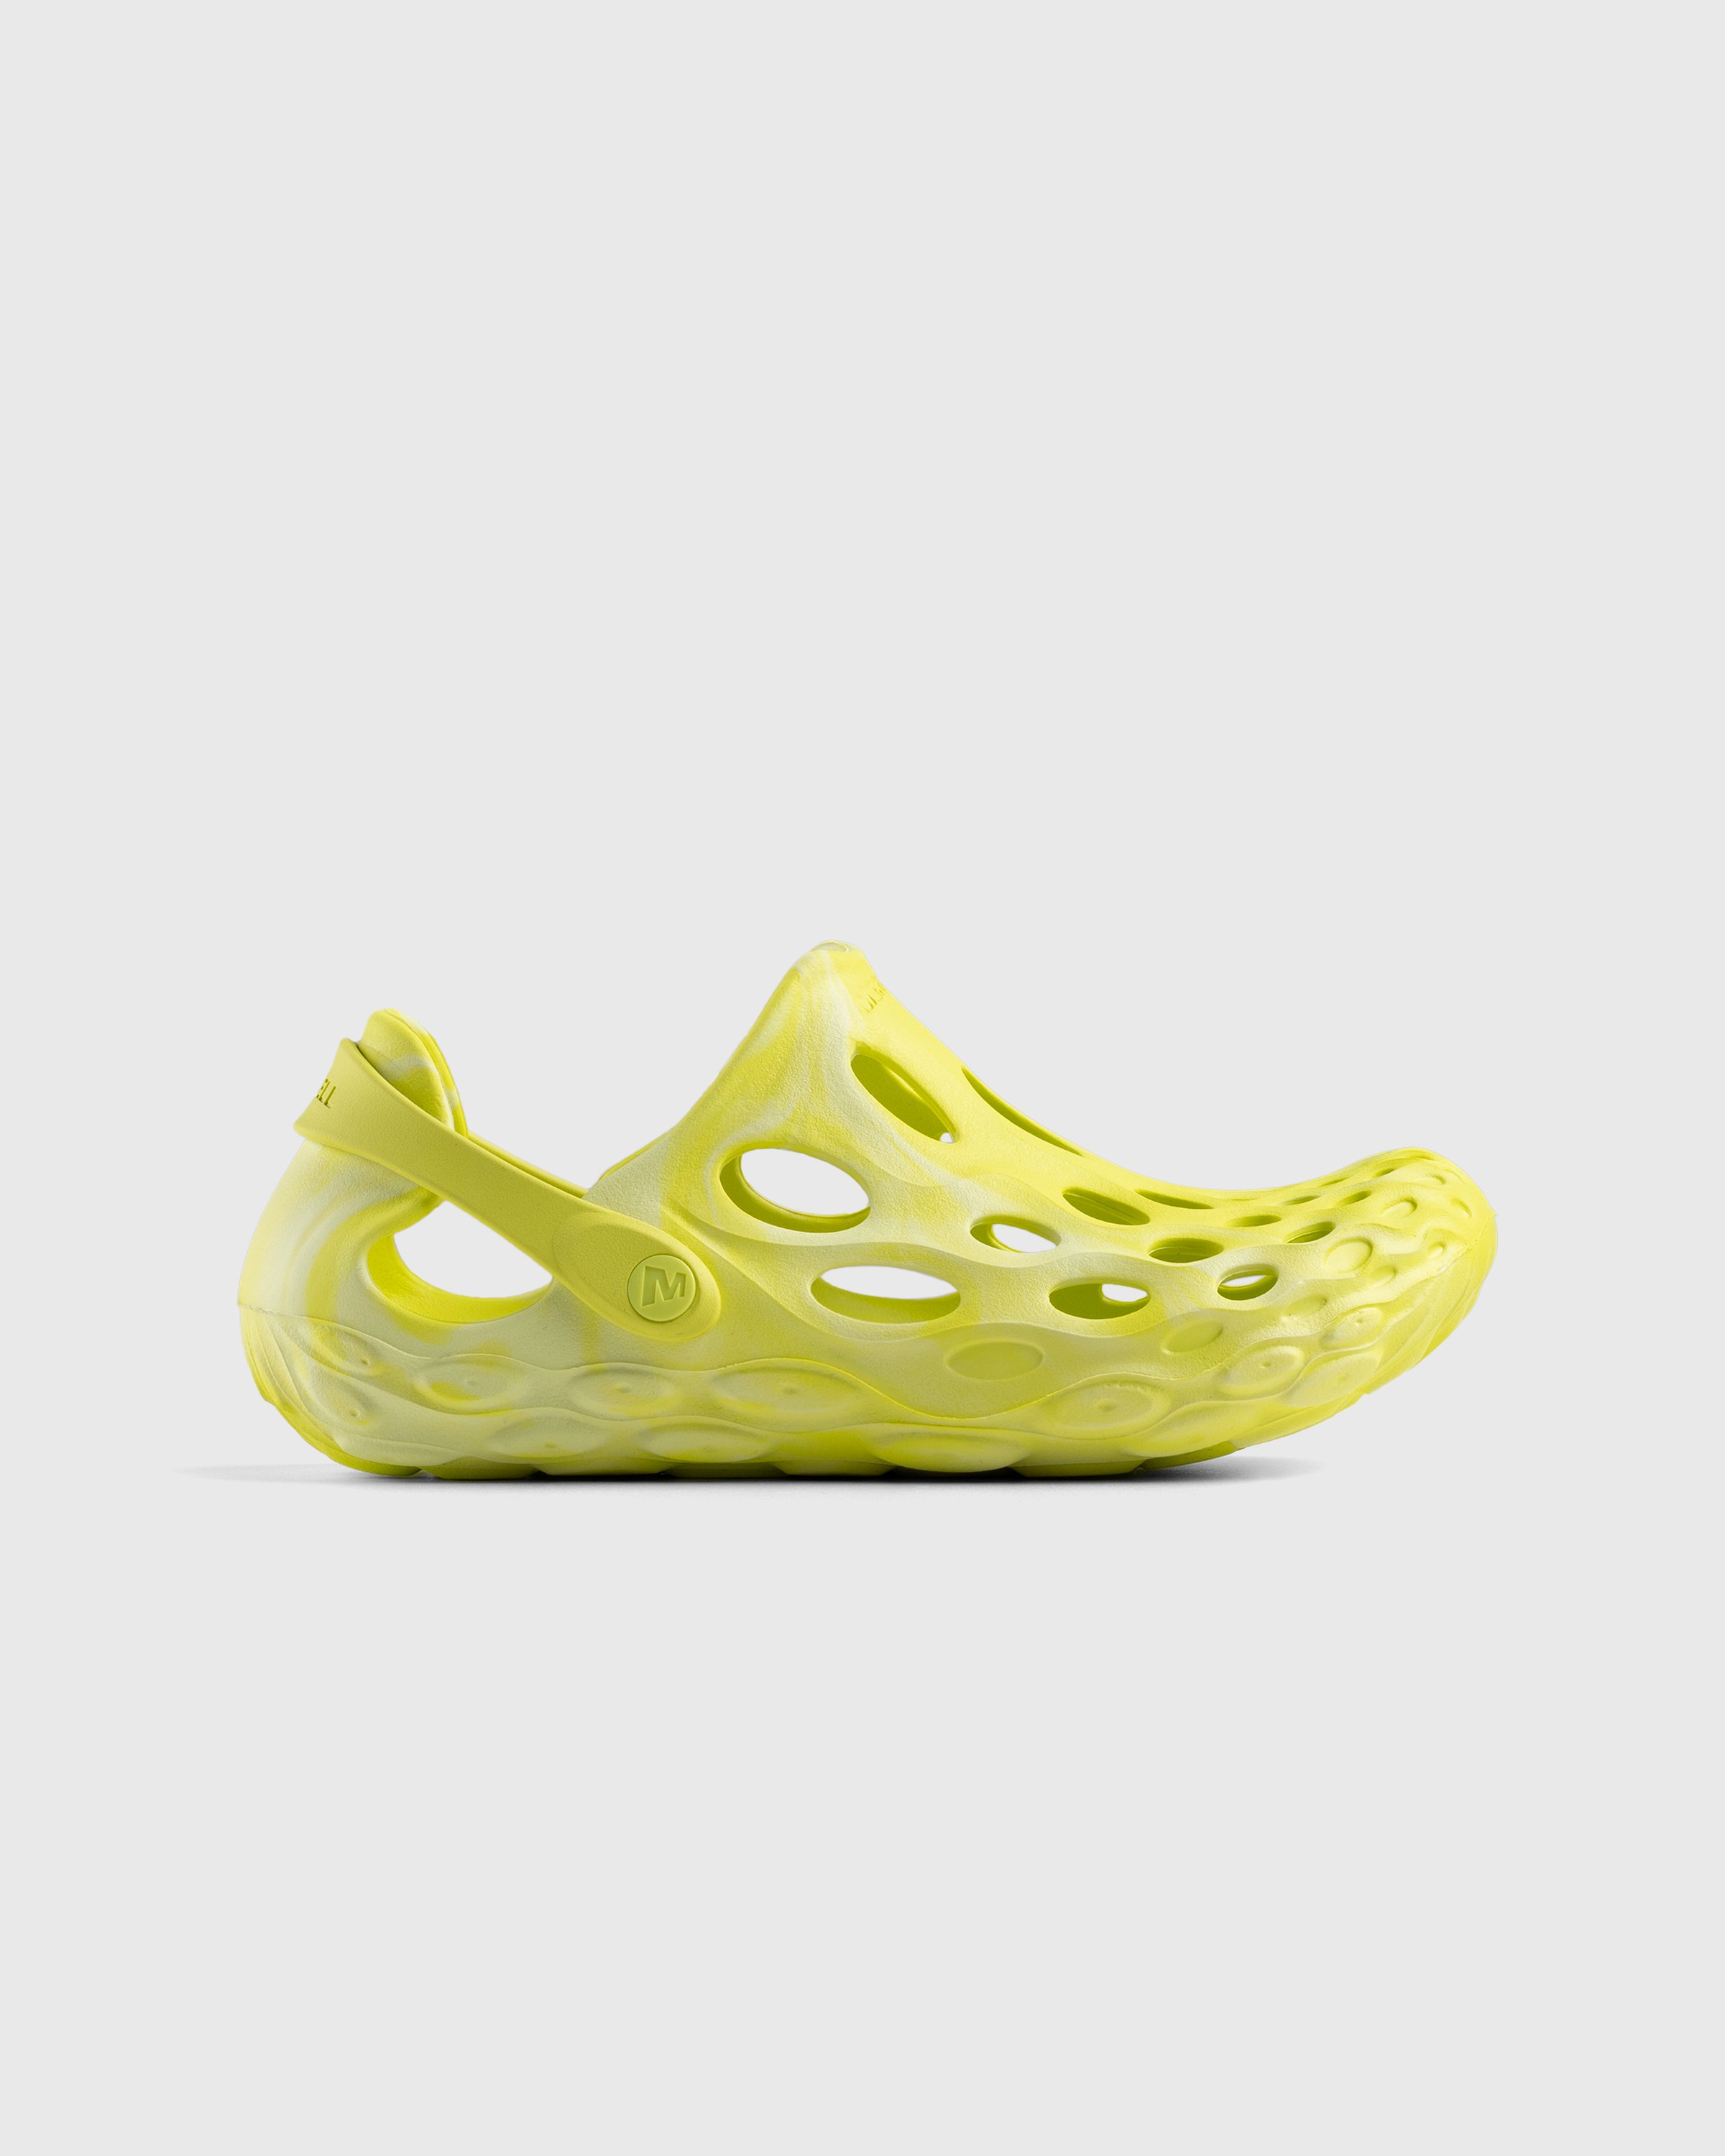 Merrell - Hydro Moc Pomelo - Footwear - Yellow - Image 1